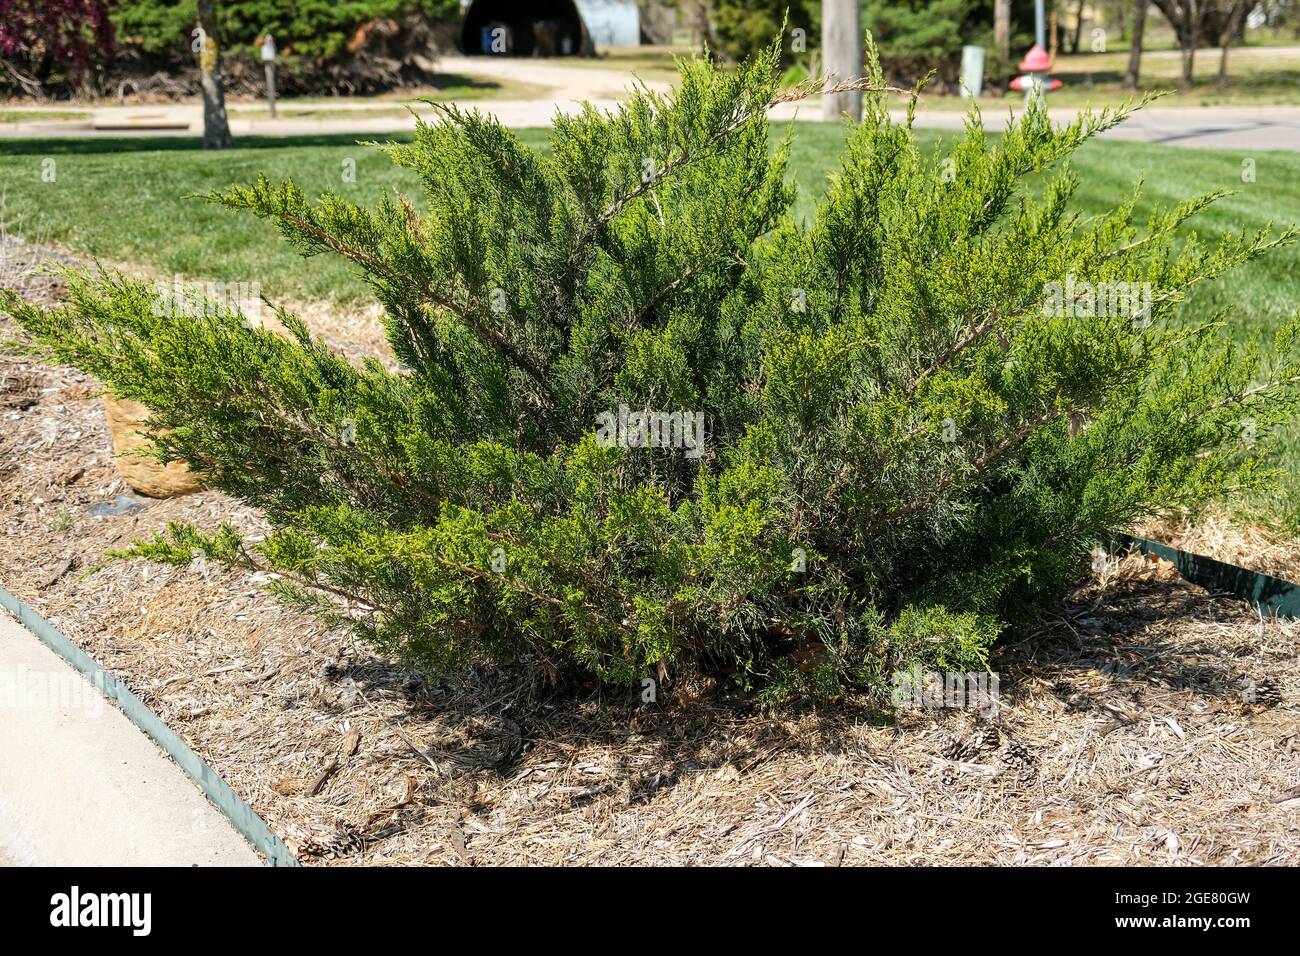 Juniper shrub or bush, junipers, growing in a mulched bed in Wichita, Kansas, USA. Stock Photo